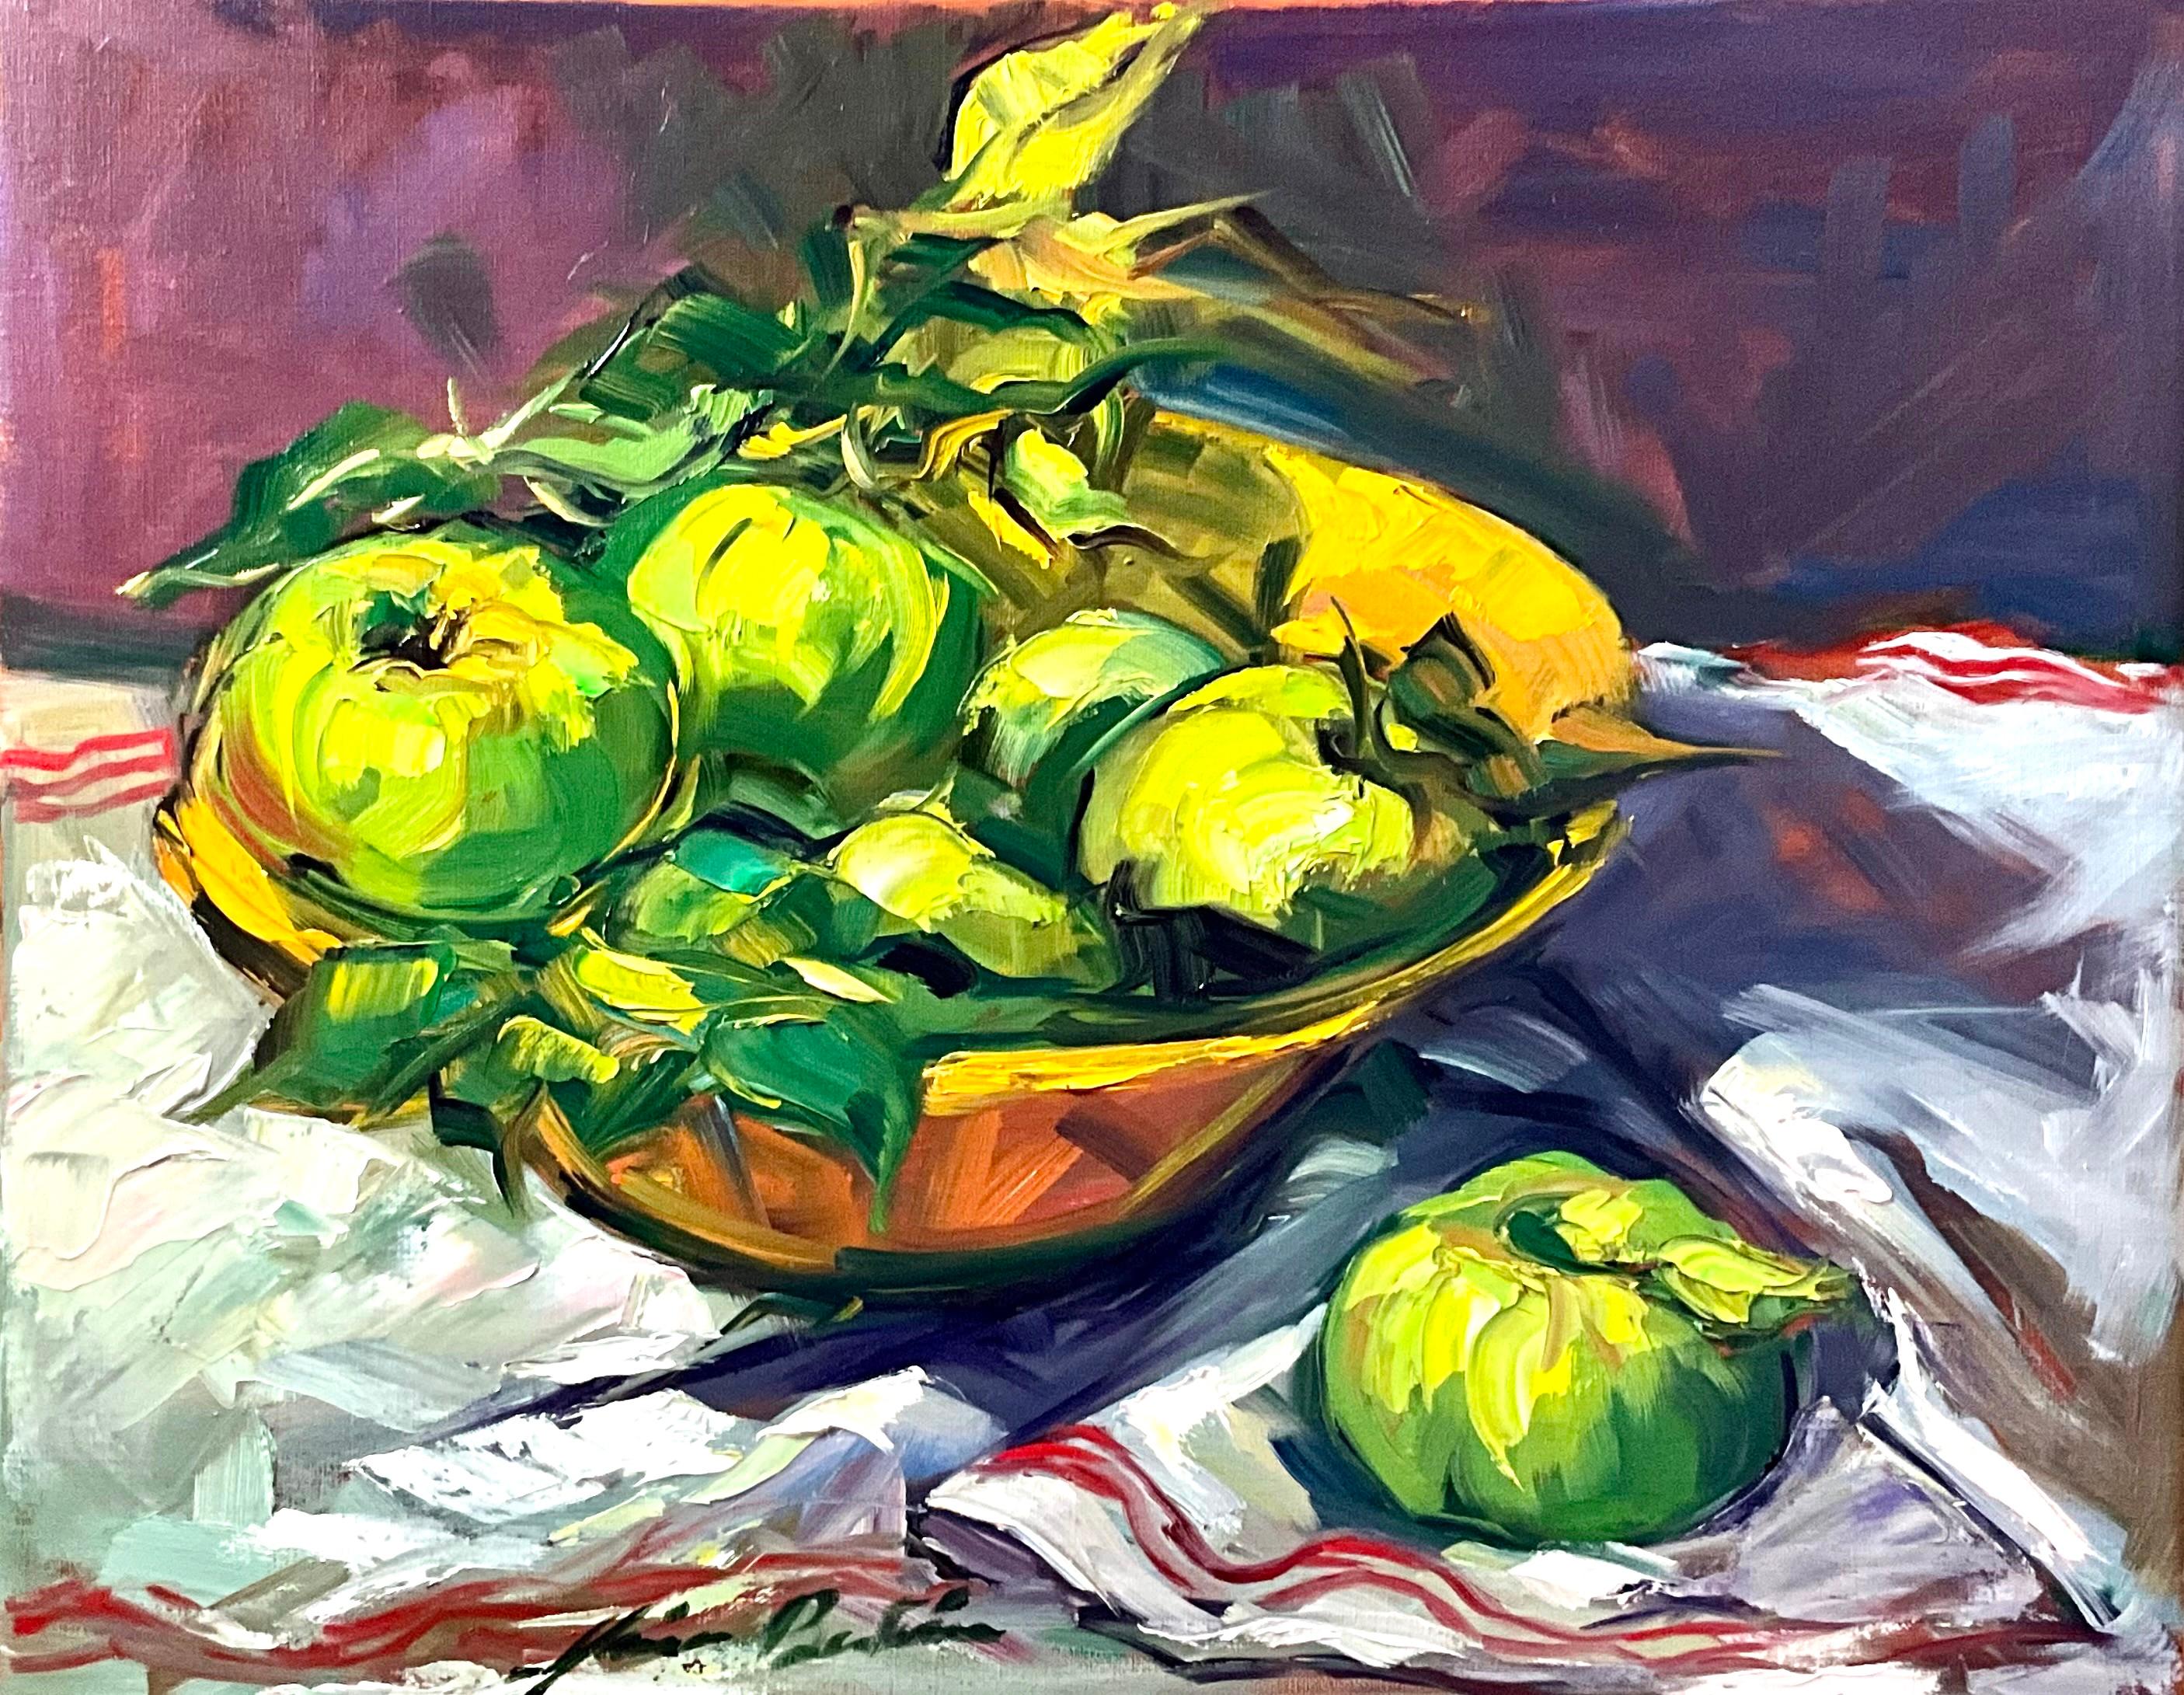 Maria Bertrán Still-Life Painting - "Green Apples, Yellow Bowl" Contemporary Impressionist Still Life Oil